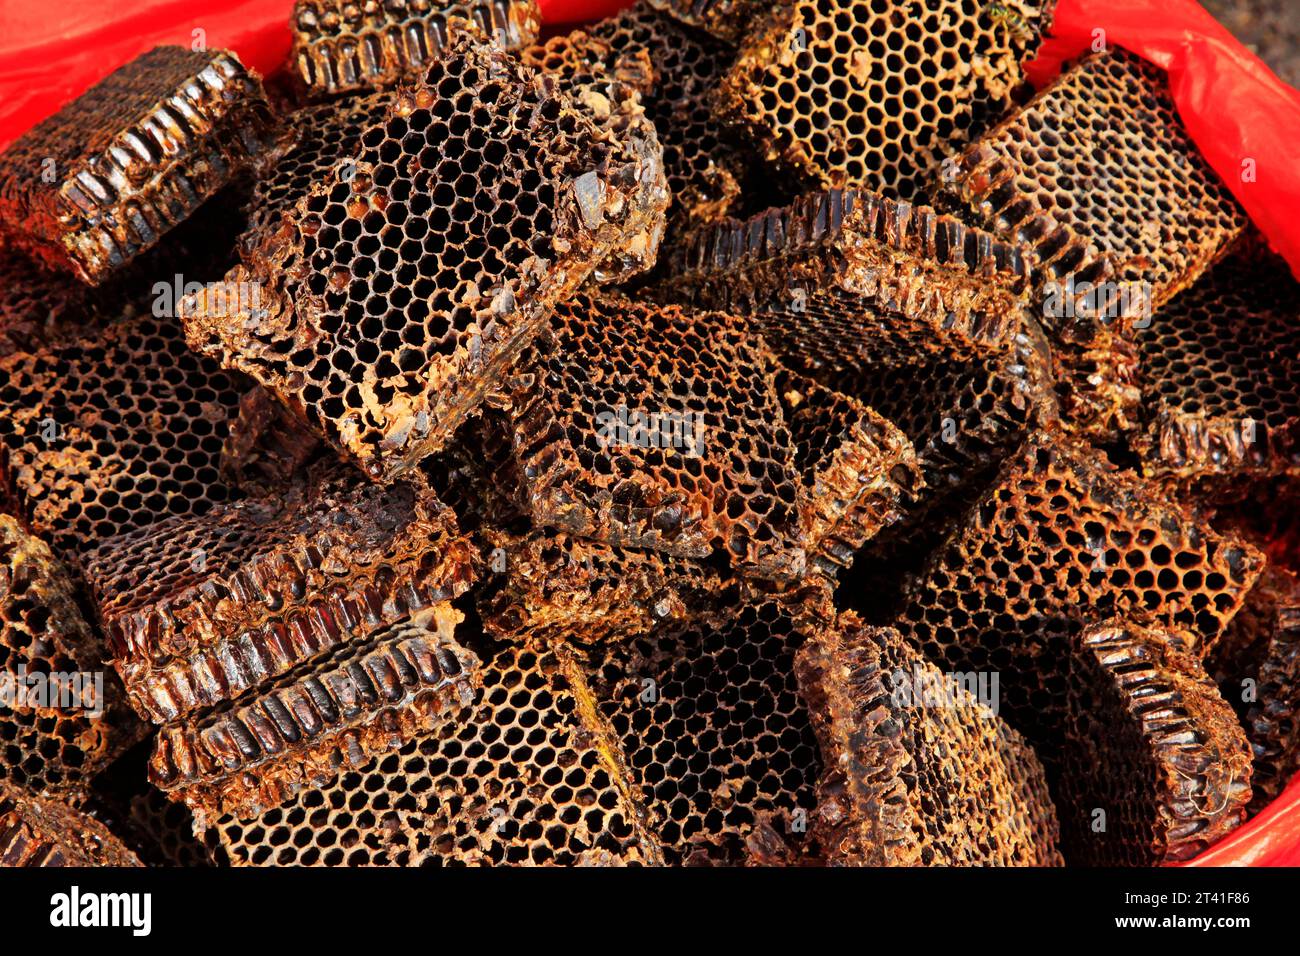 Honeycomb debris piled up together, closeup of photo Stock Photo